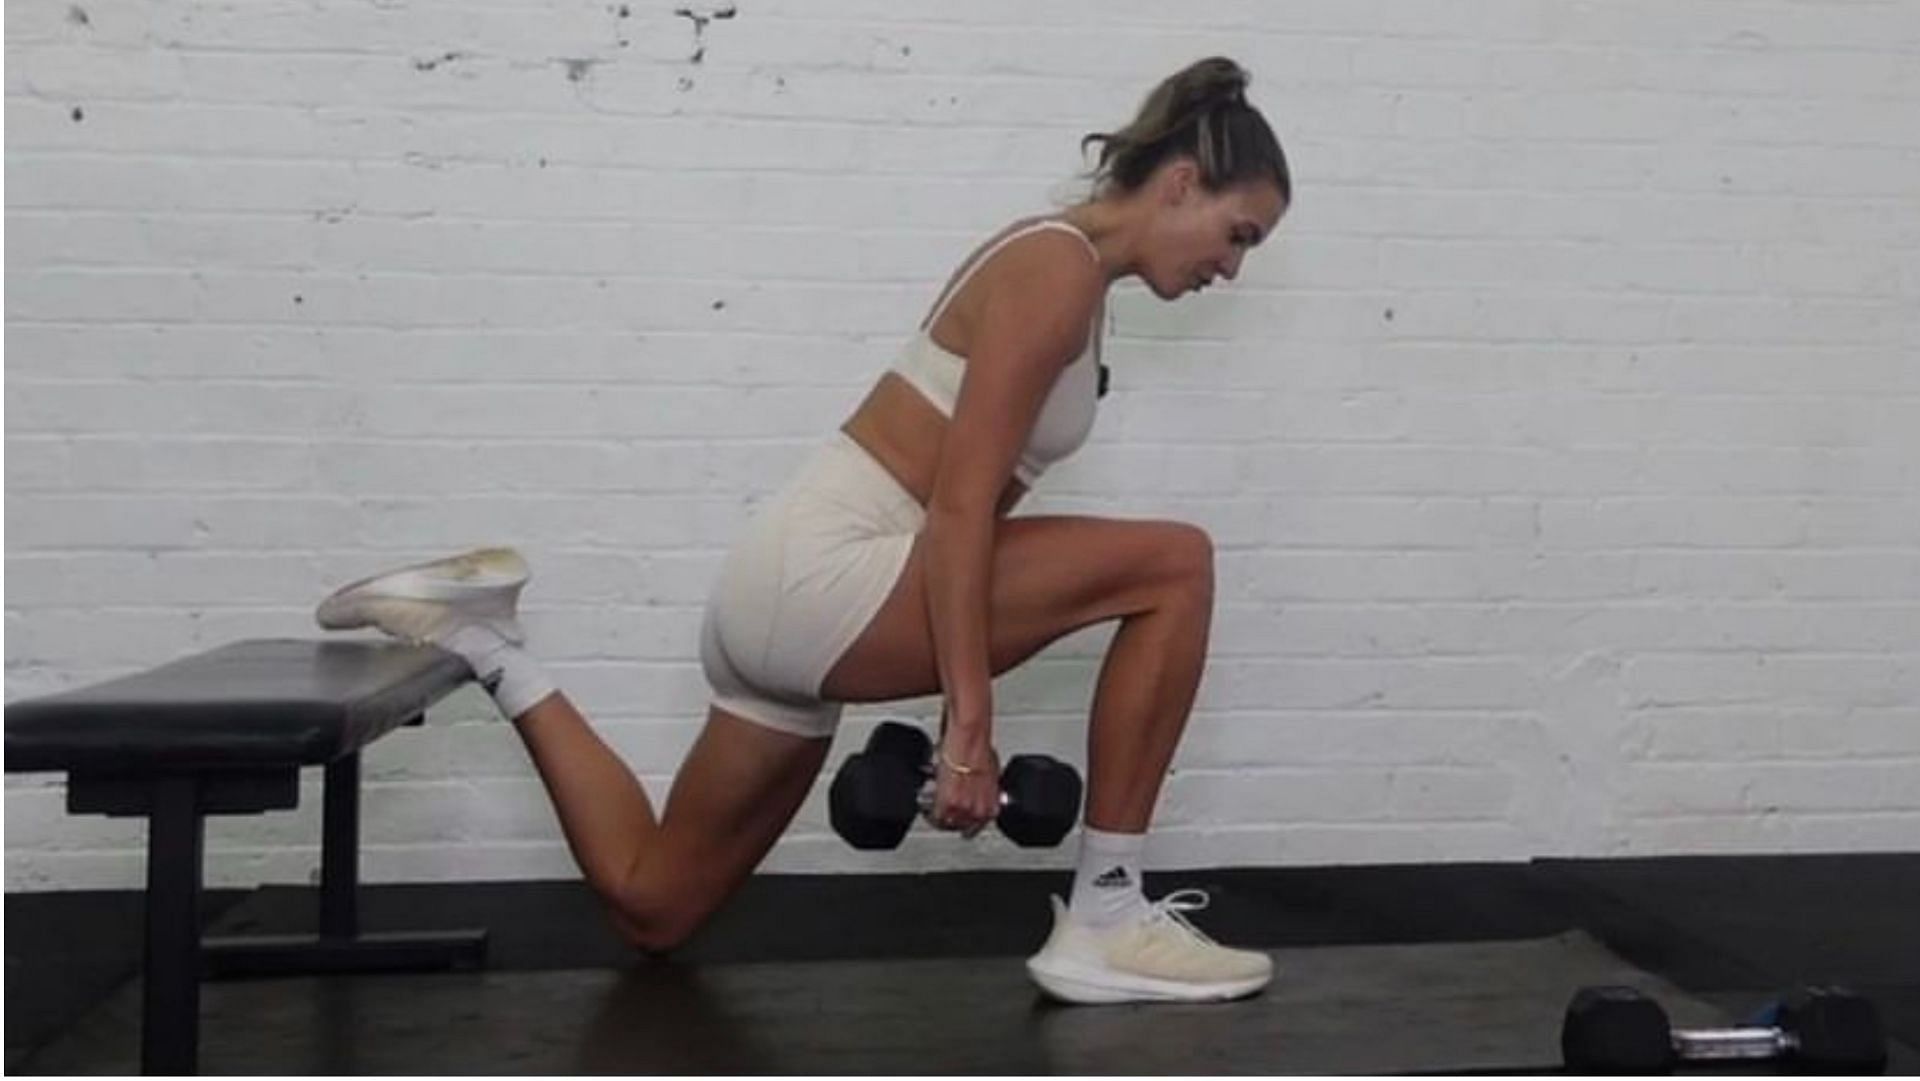 Bulgarian split squat is an amazing lower body exercise. (Photo via Instagram/bodyactive.bybritt)